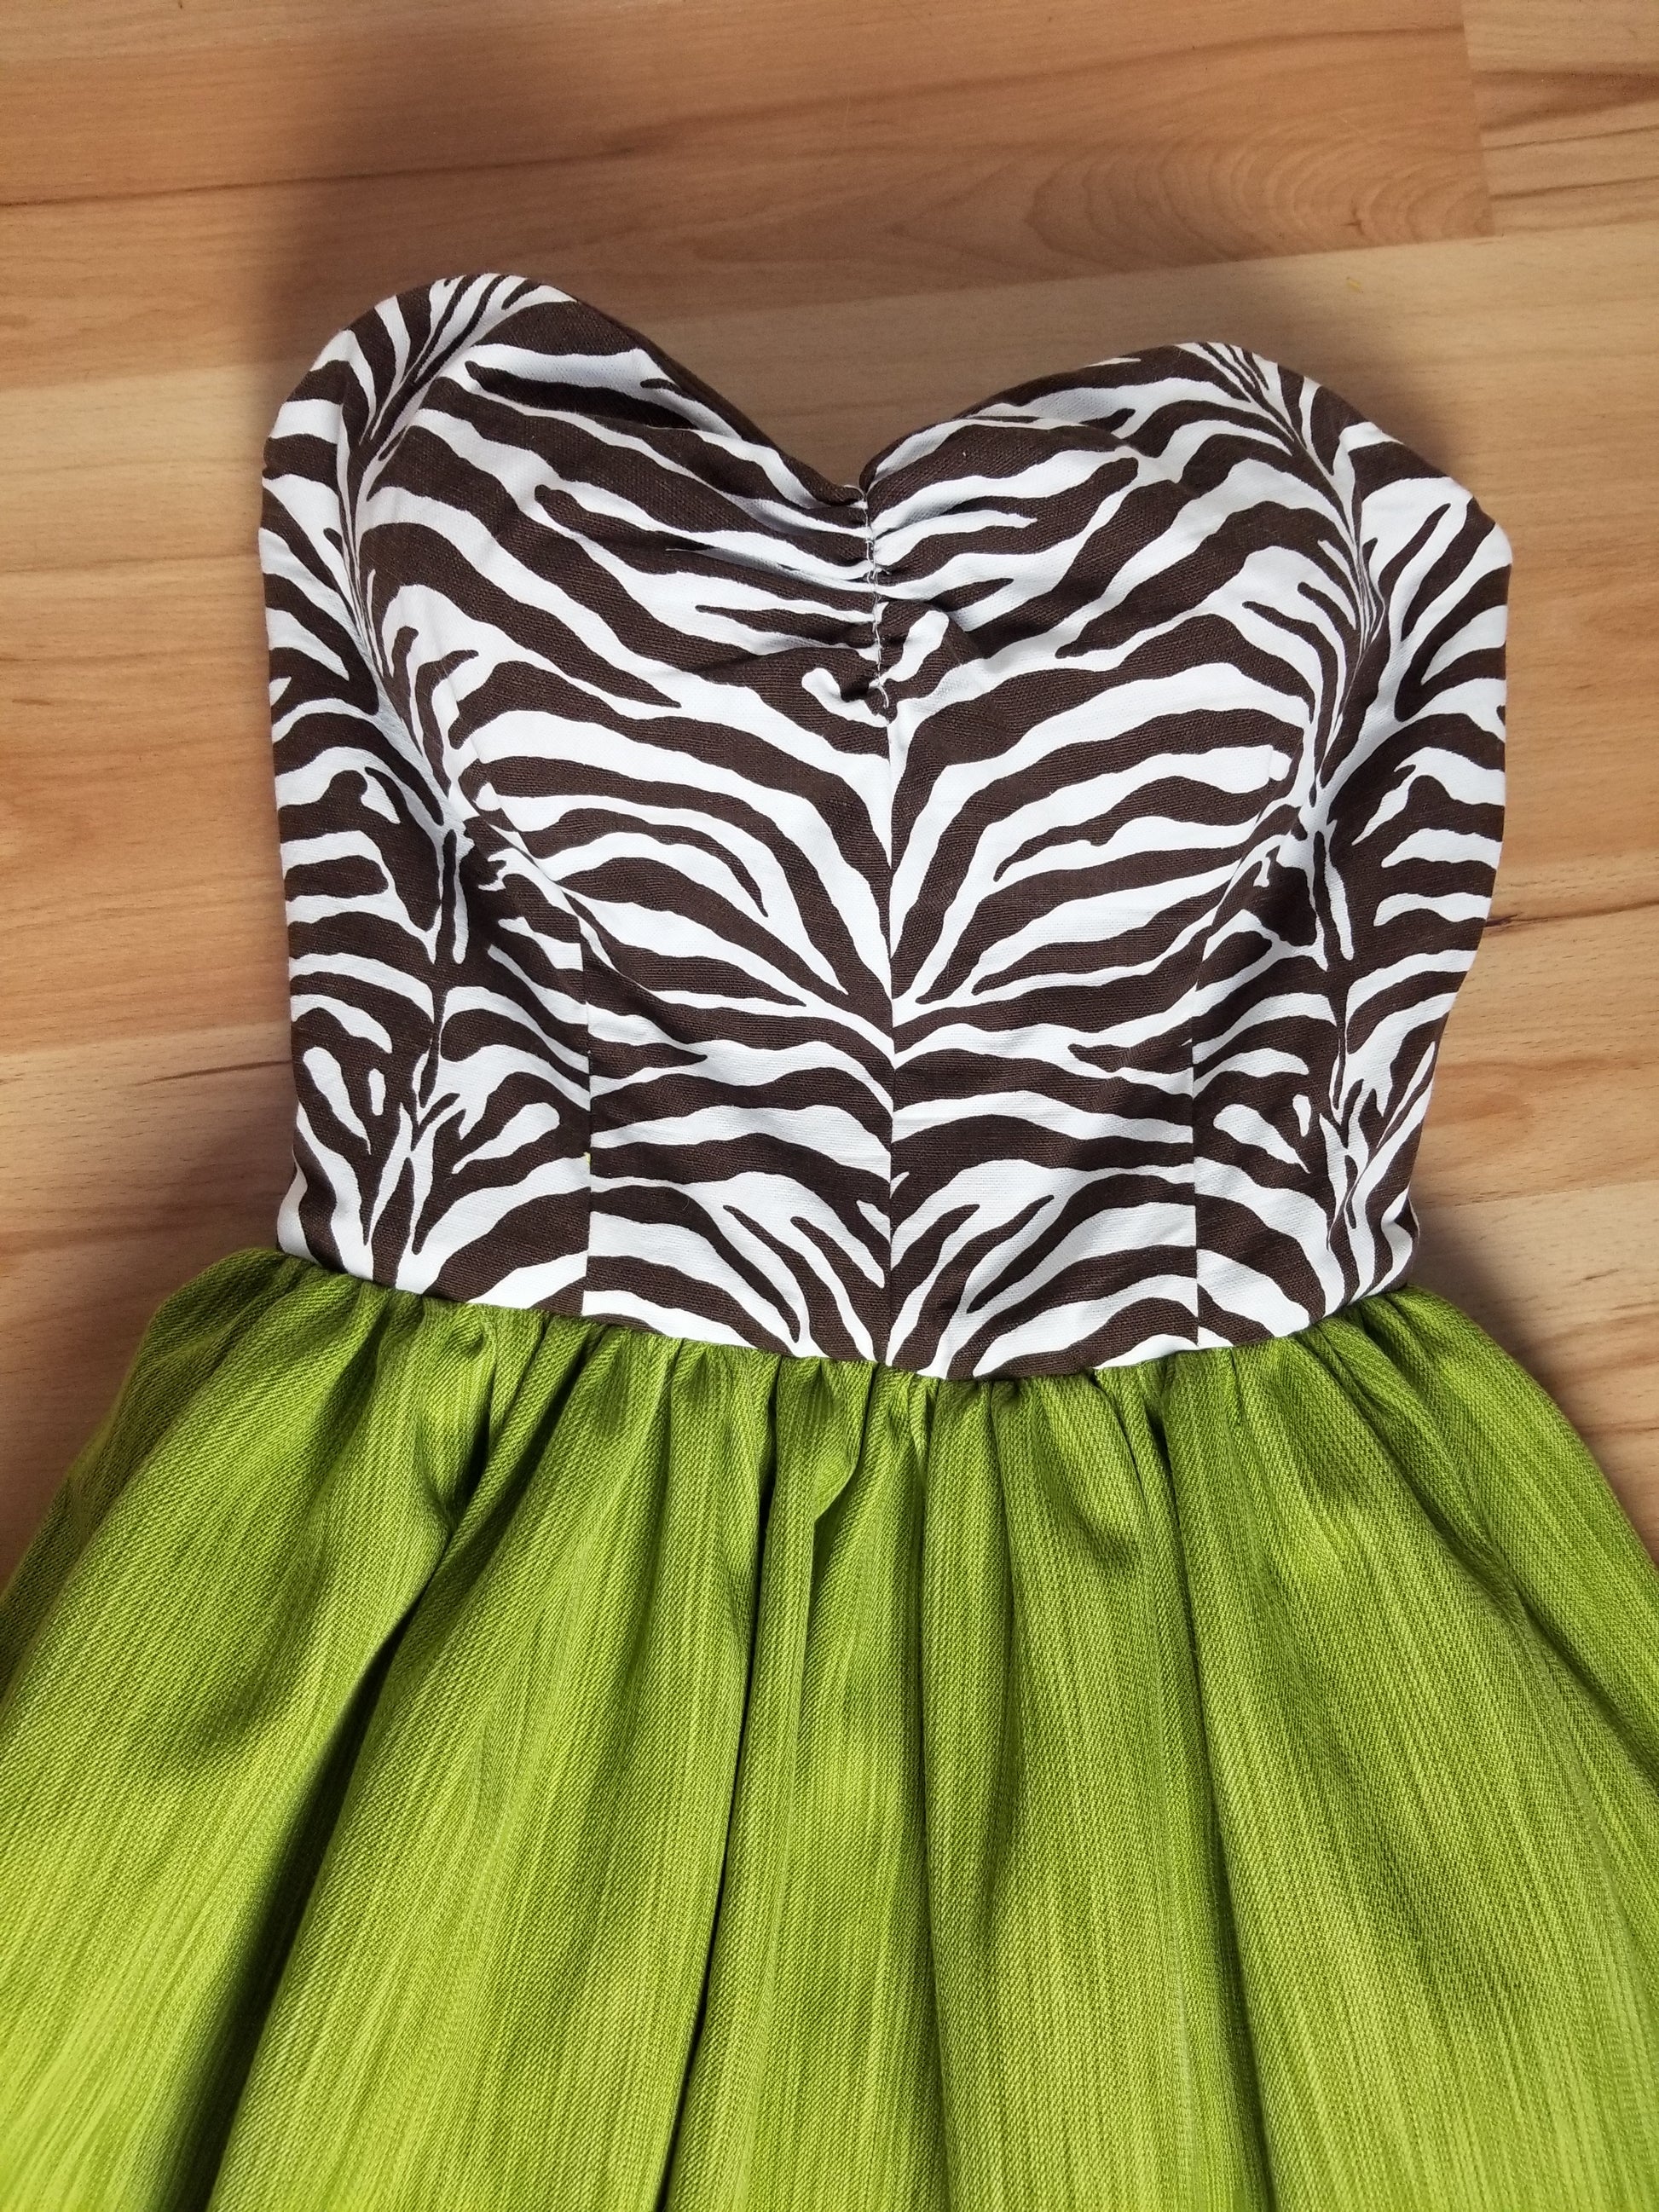 Zebra Chartruese Women's Dress by Hollyville